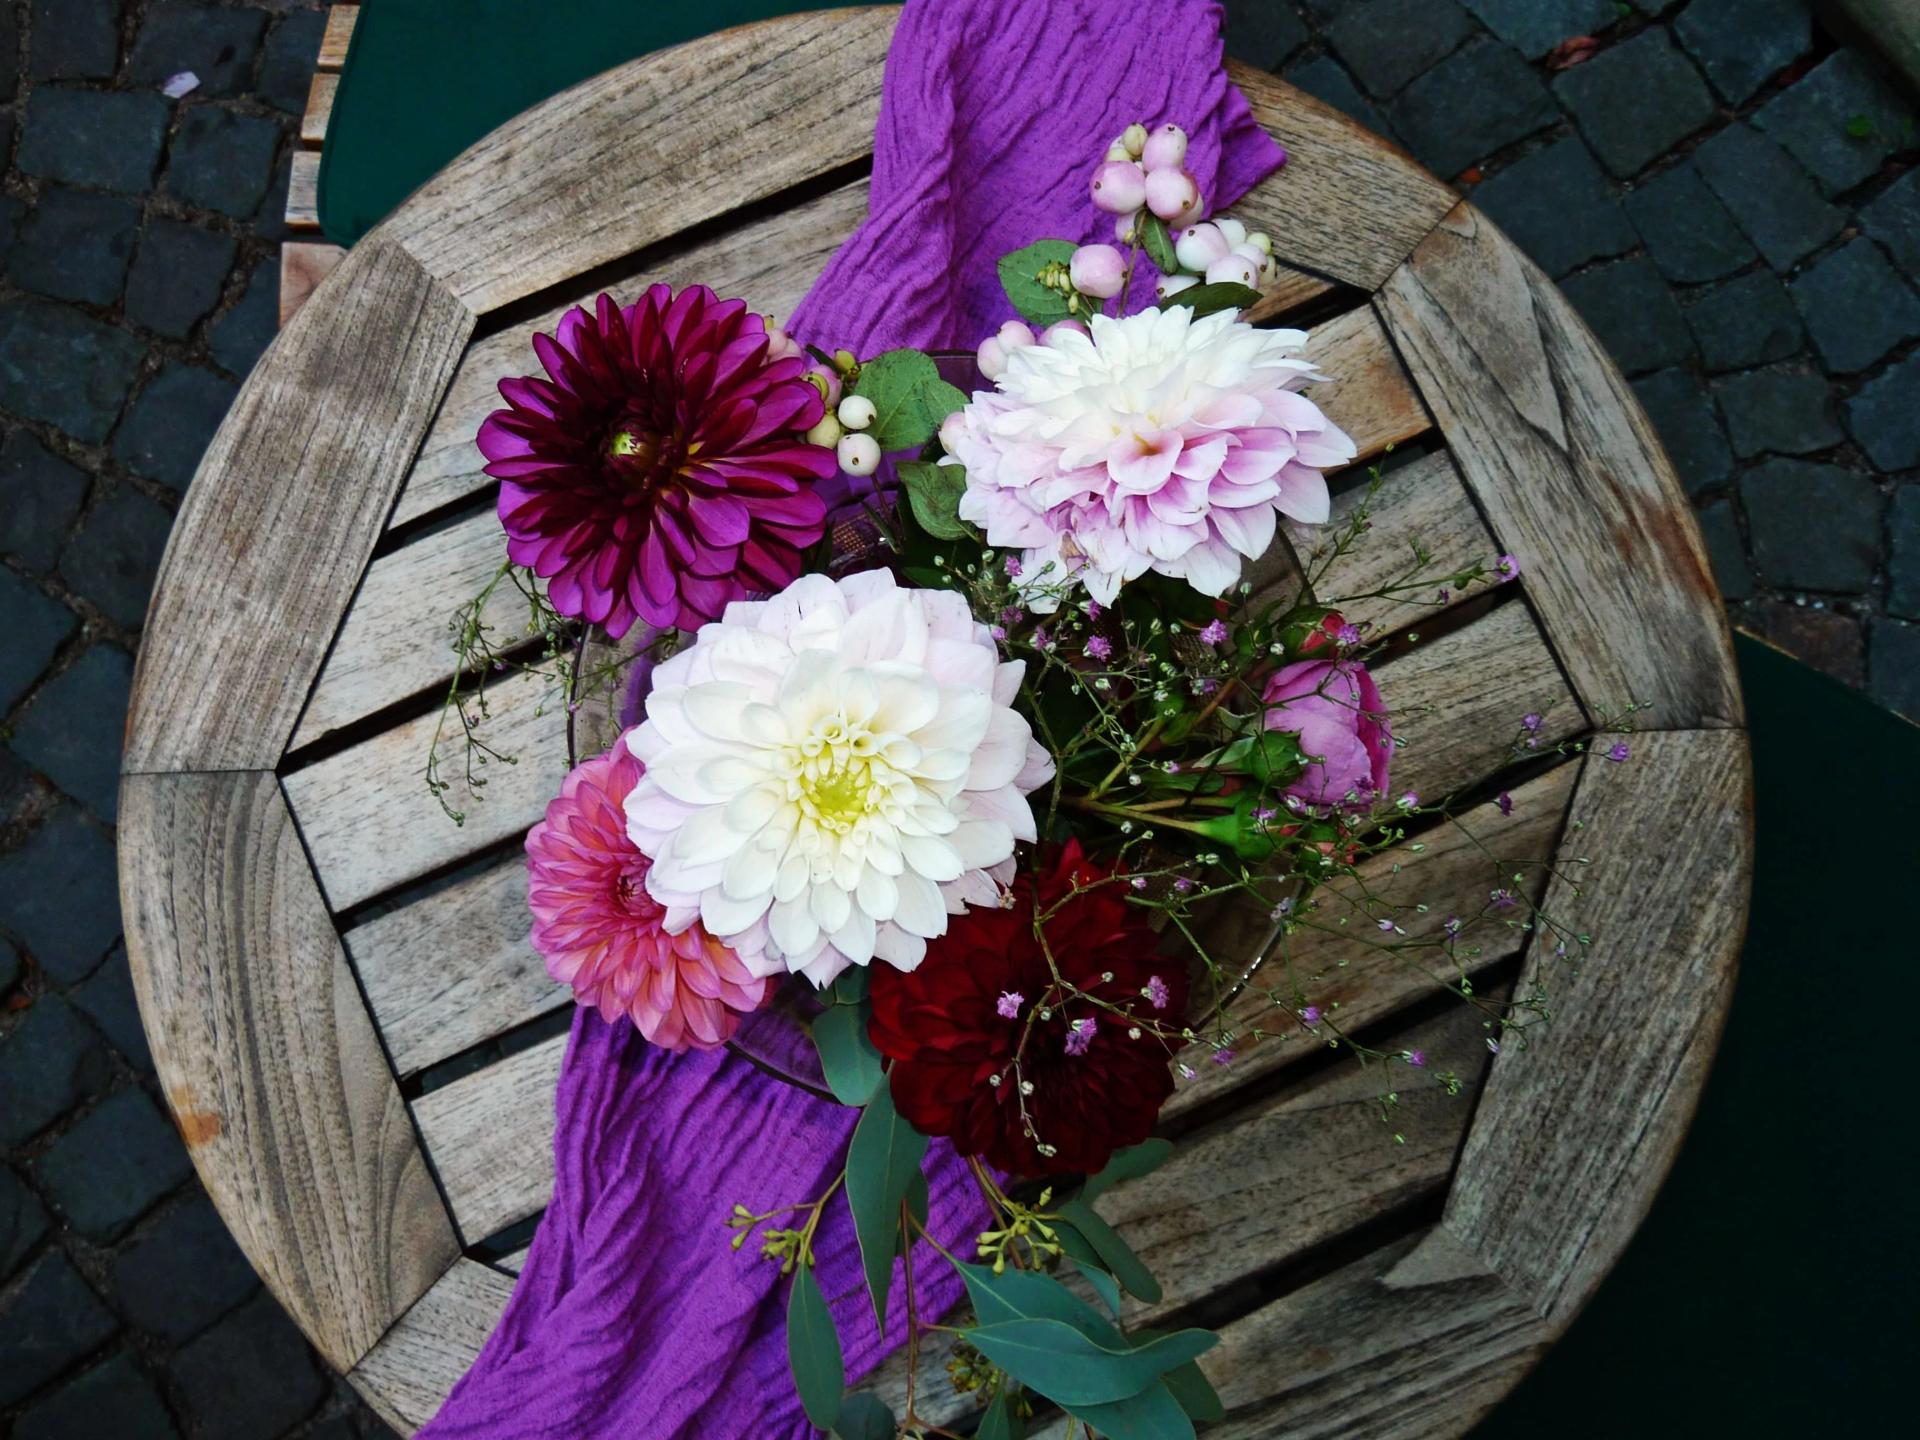 Flowers in a Decorative Arrangement